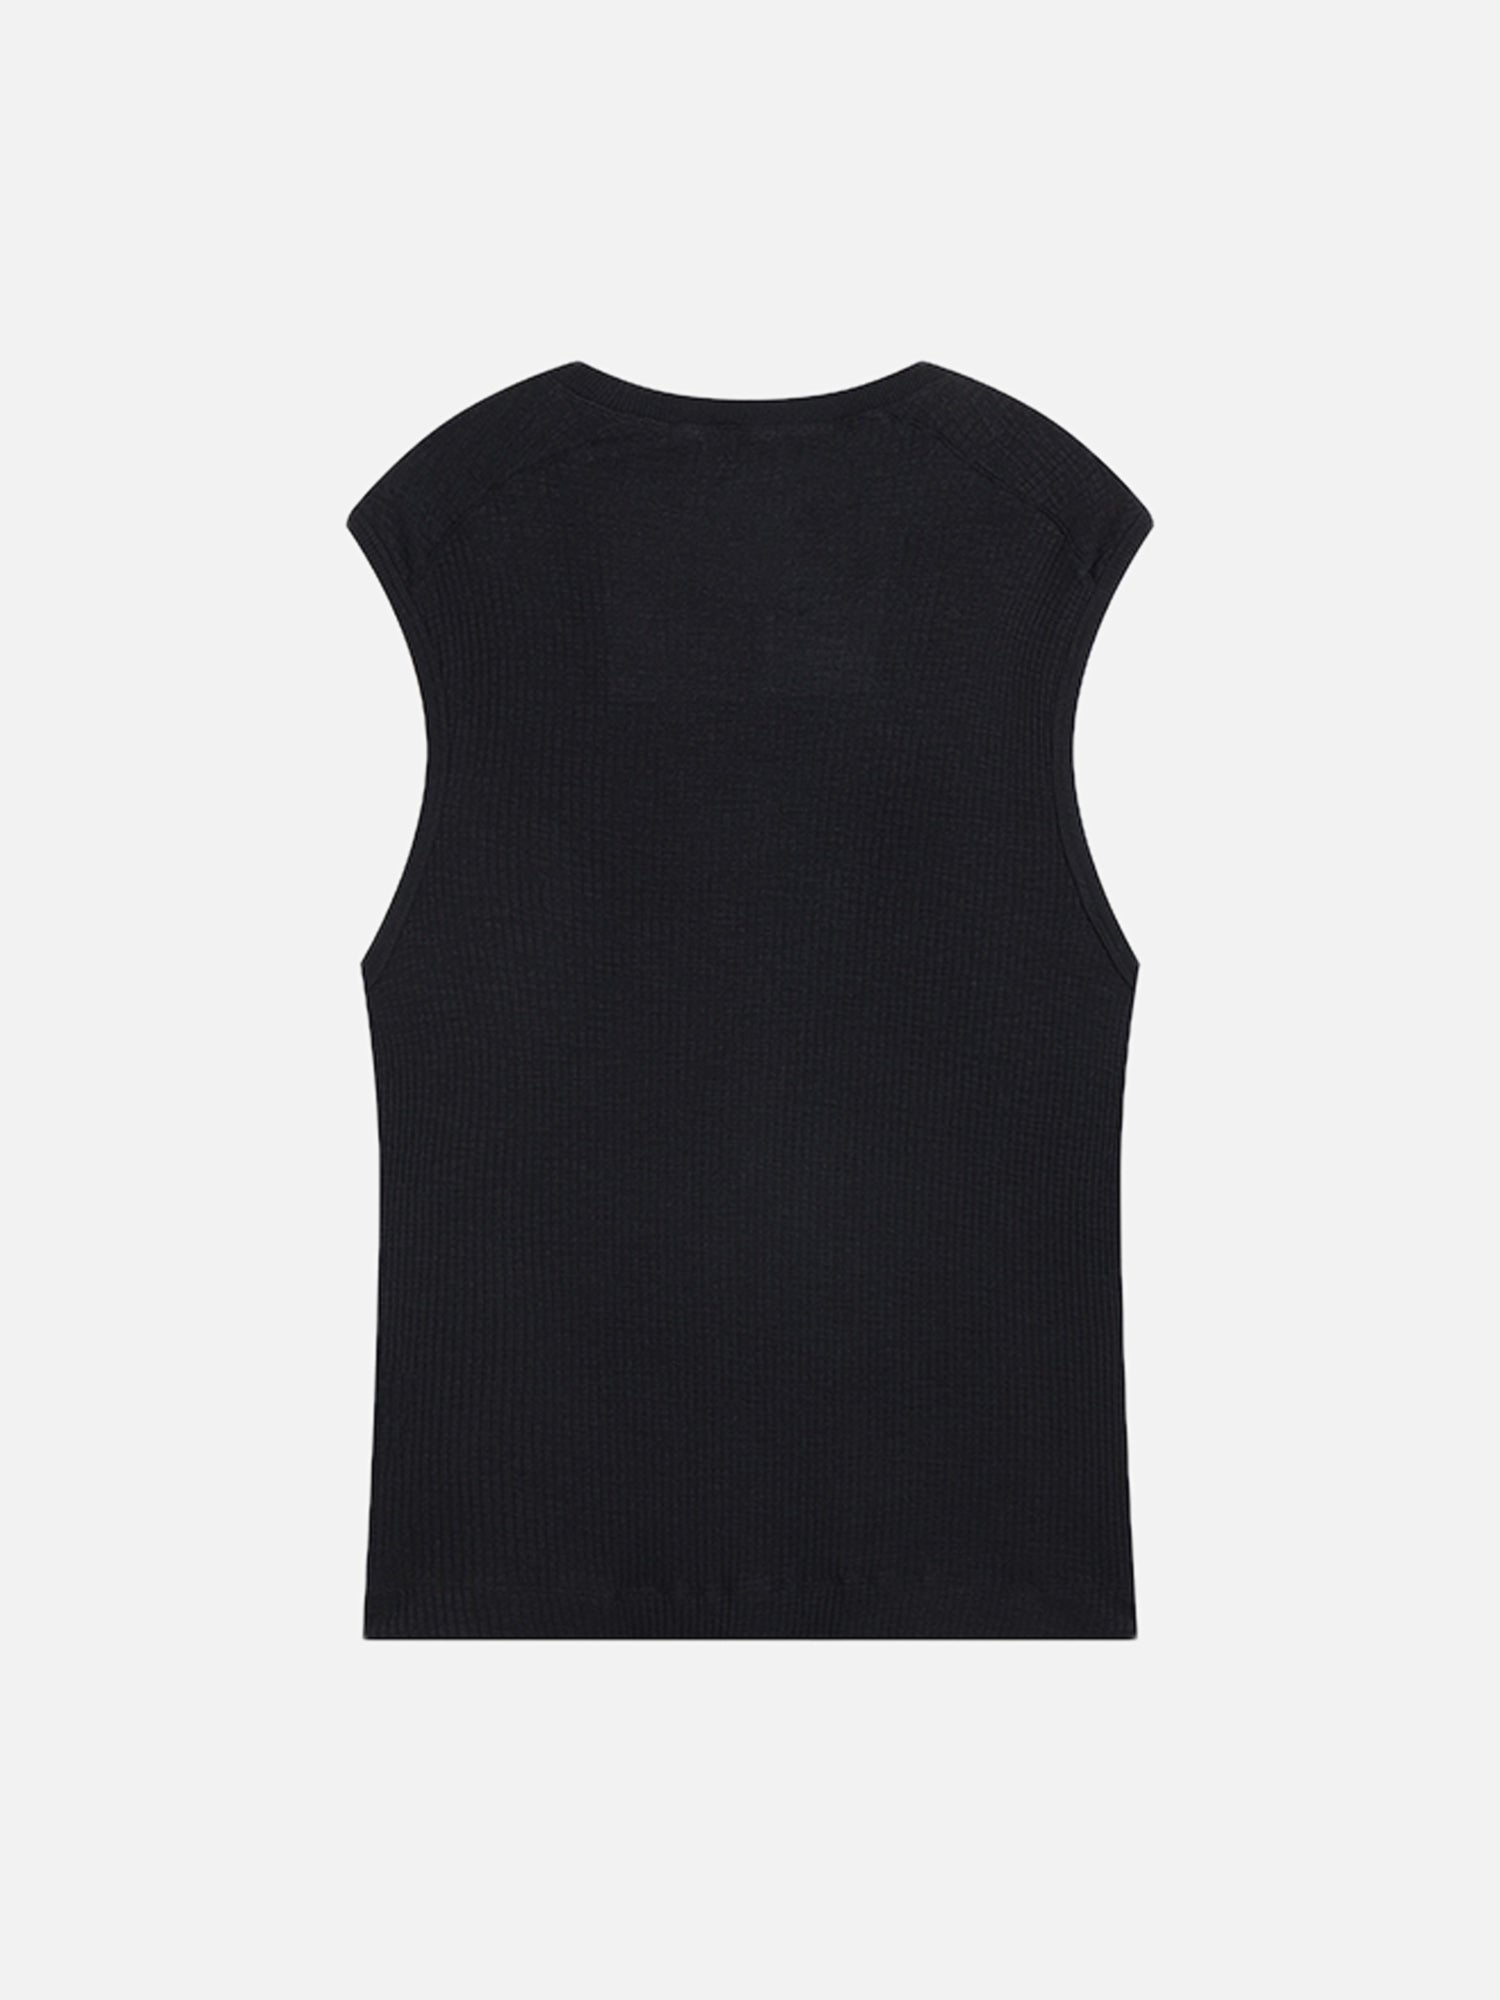 American Street Hip-hop Tight-fitting Stretch Black Printed Pit Vest